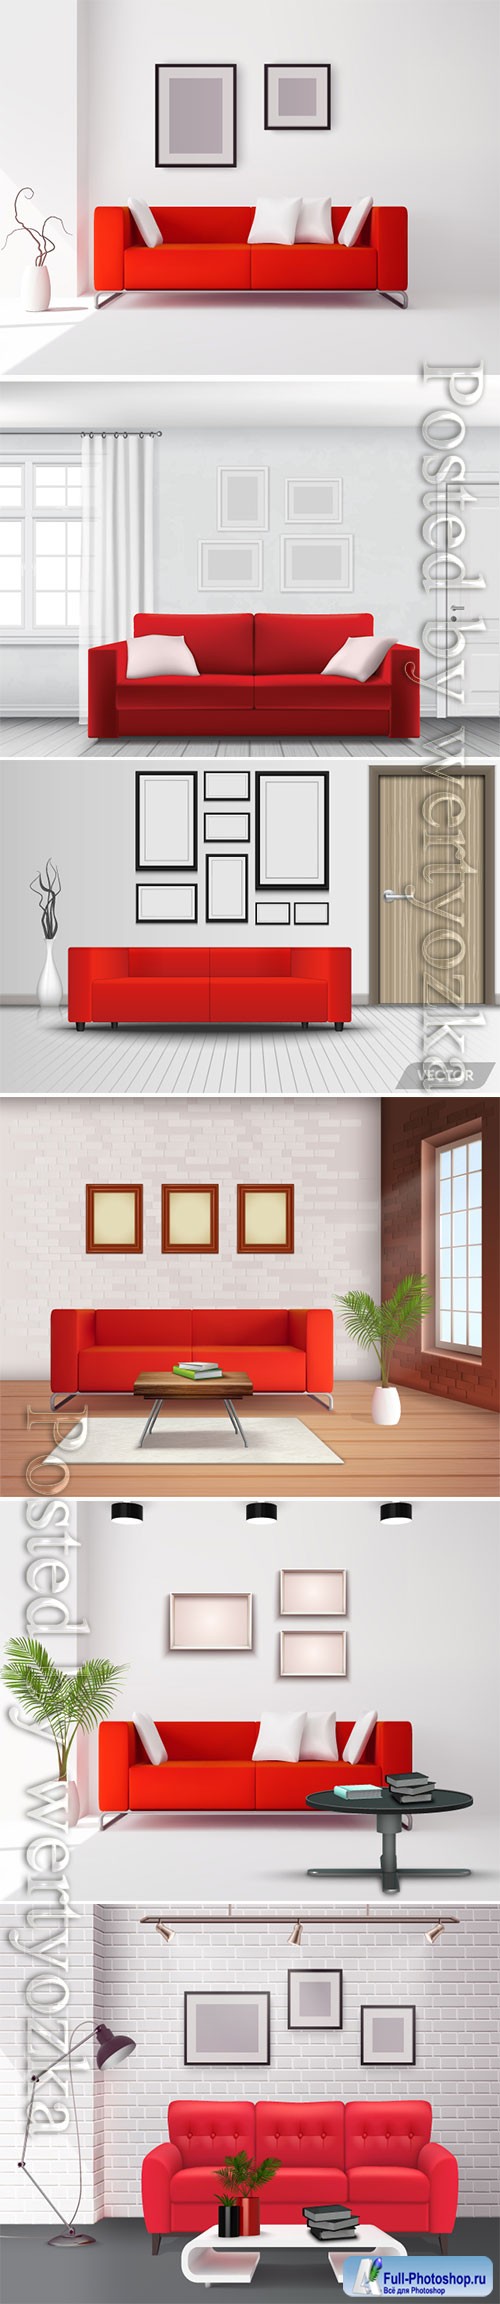 Realistic home interior vector template # 2